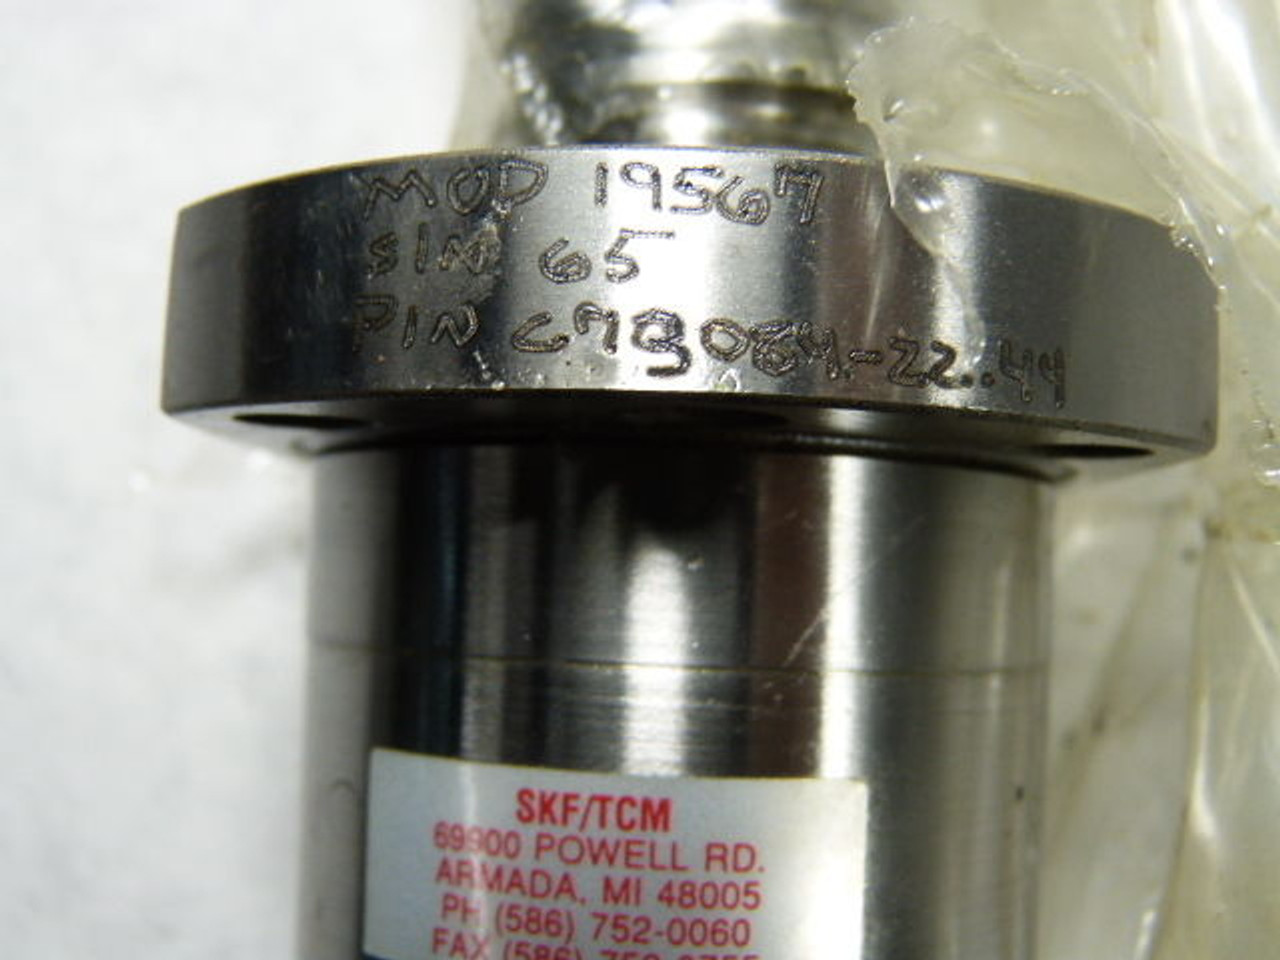 SKF/TCM 19567 C73084-22.44 Precision Ball Screw ! RFB !